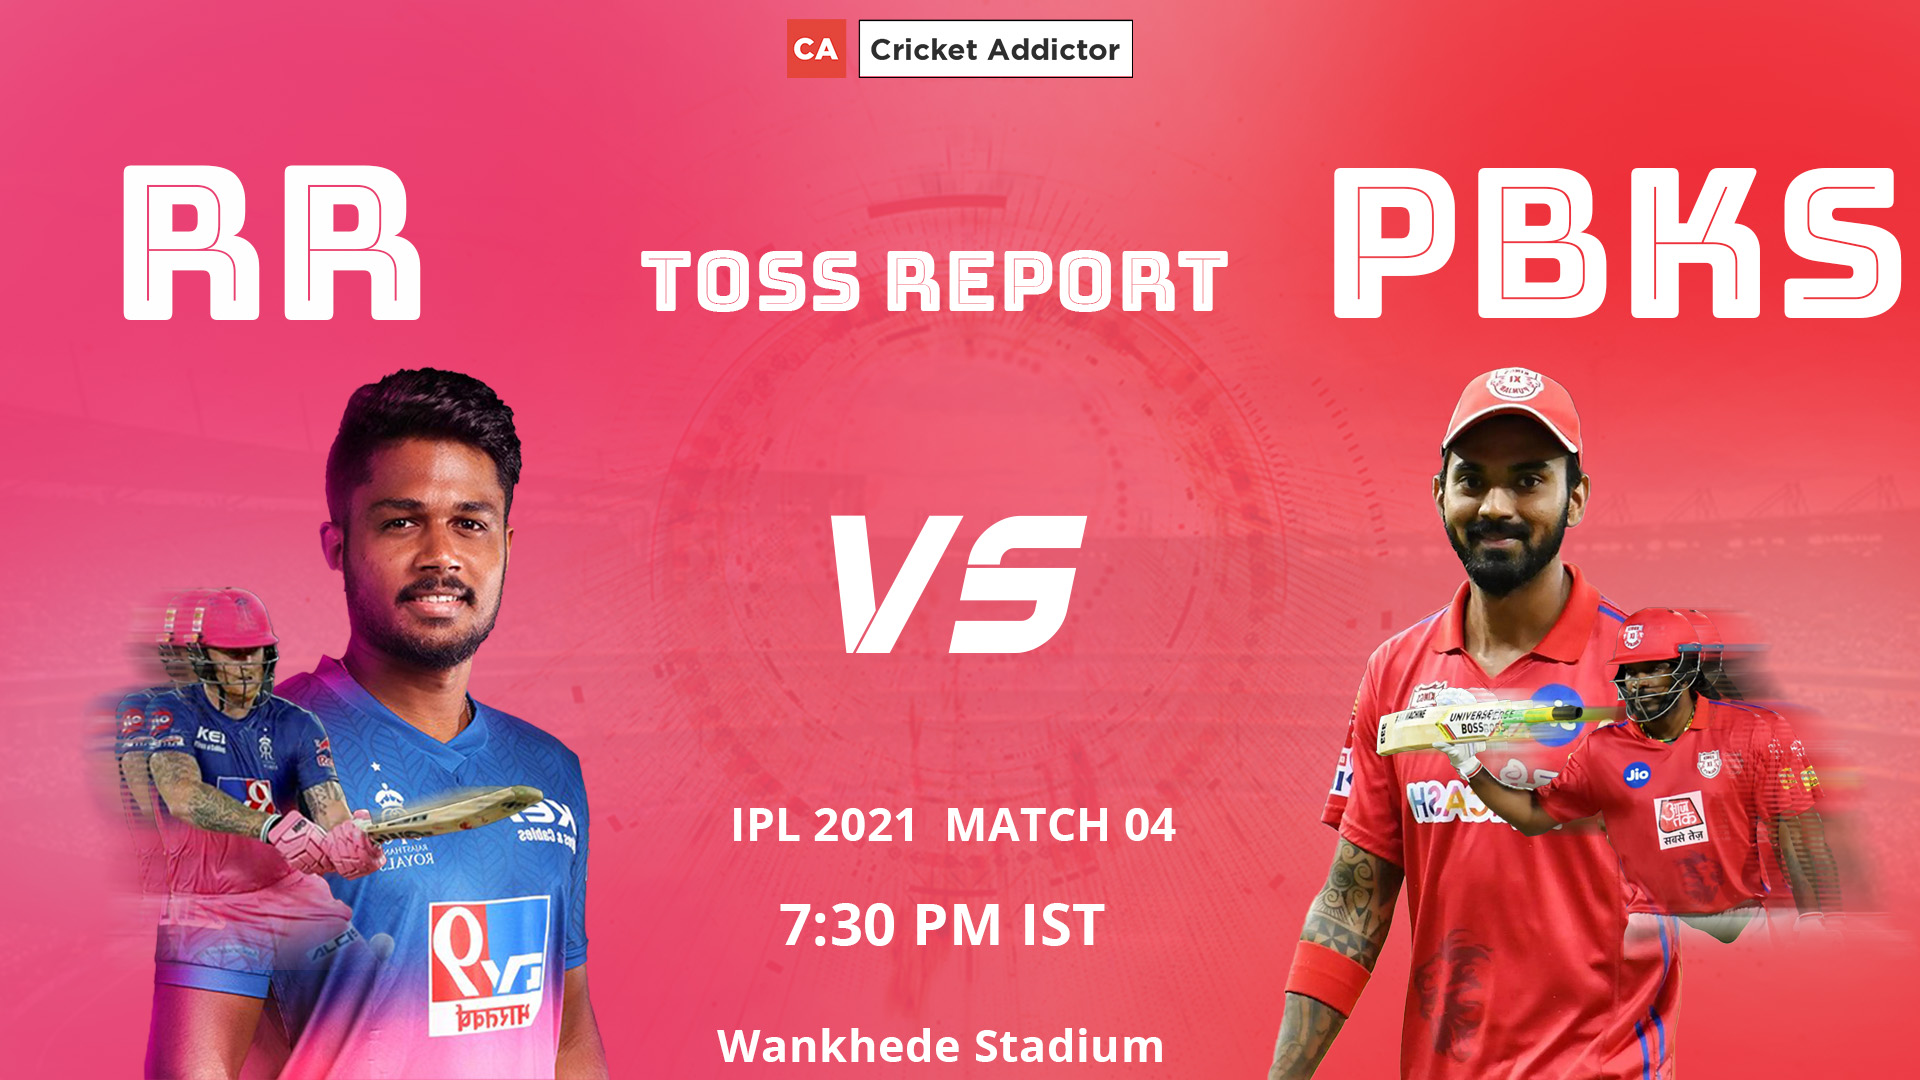 IPL 2021, Match 04: Rajasthan Royals (RR) vs Punjab Kings (PBKS)- Toss Report